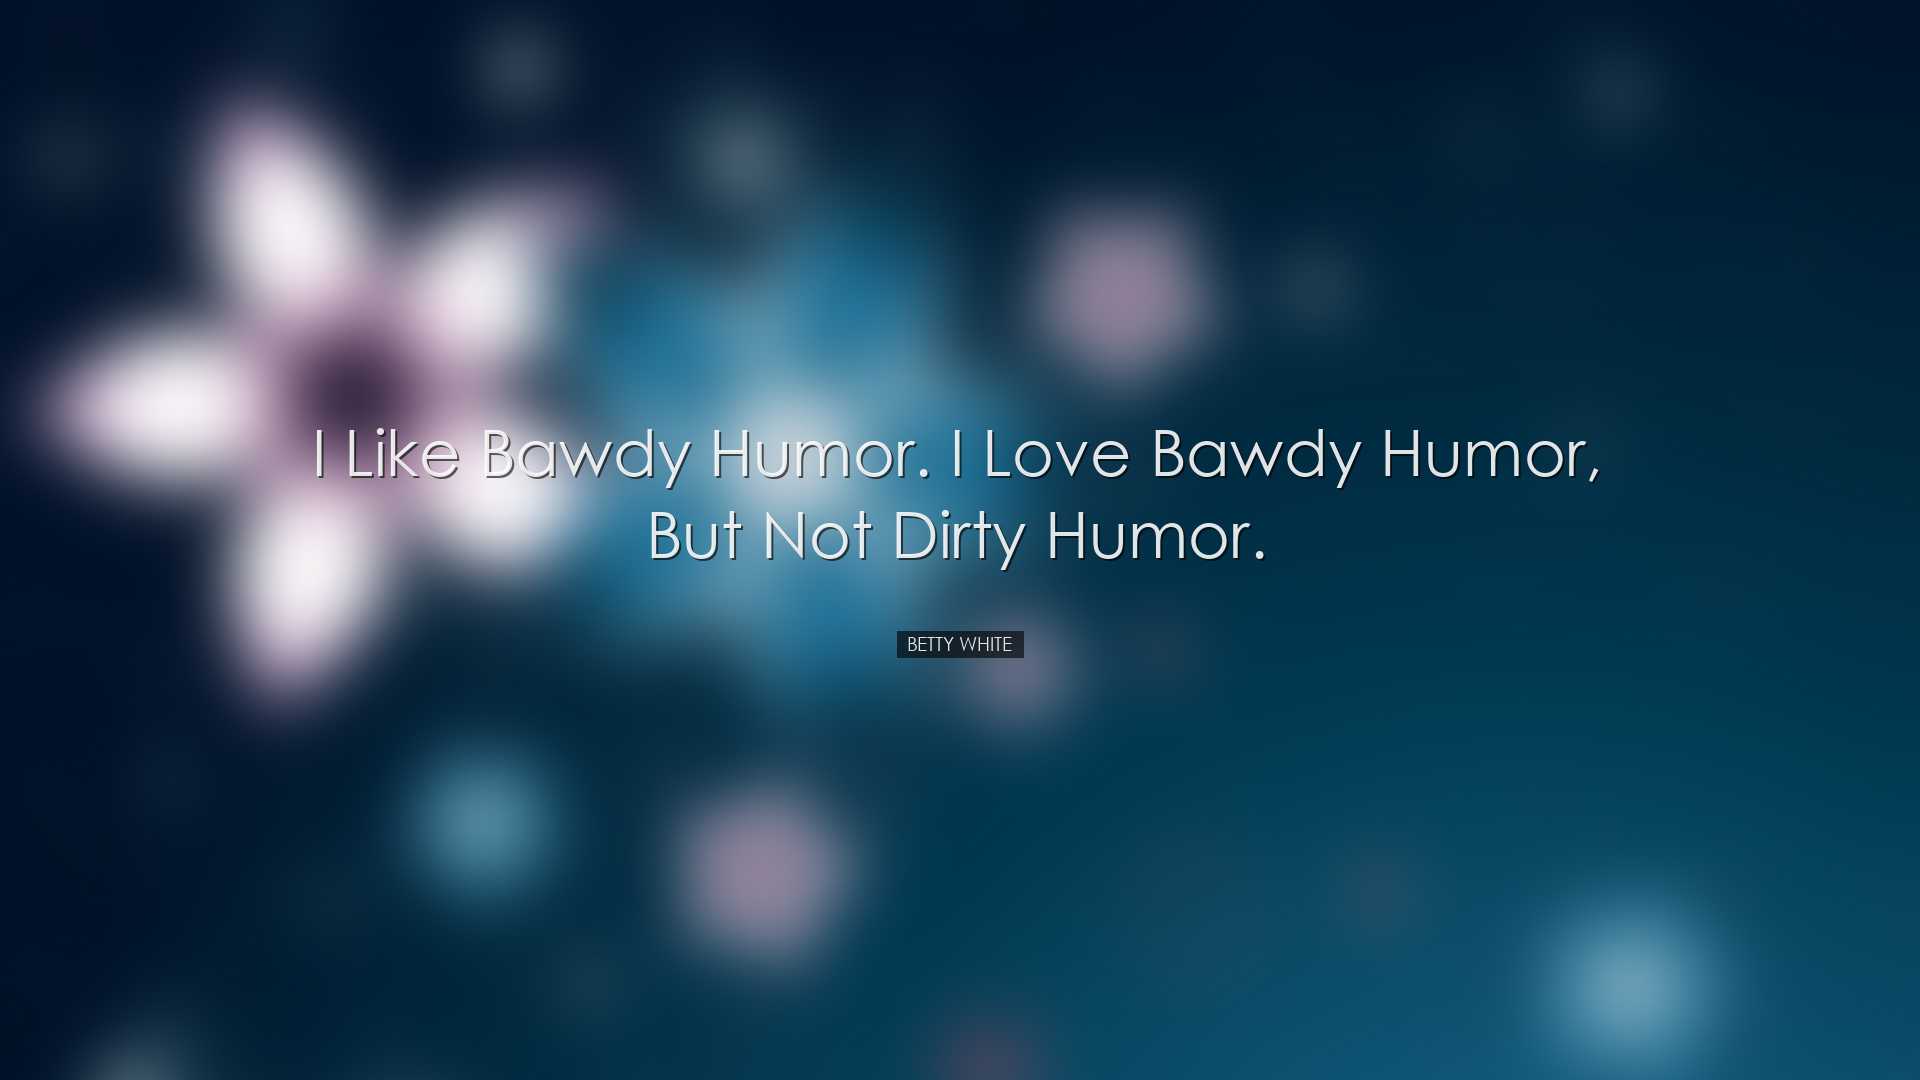 I like bawdy humor. I love bawdy humor, but not dirty humor. - Bet